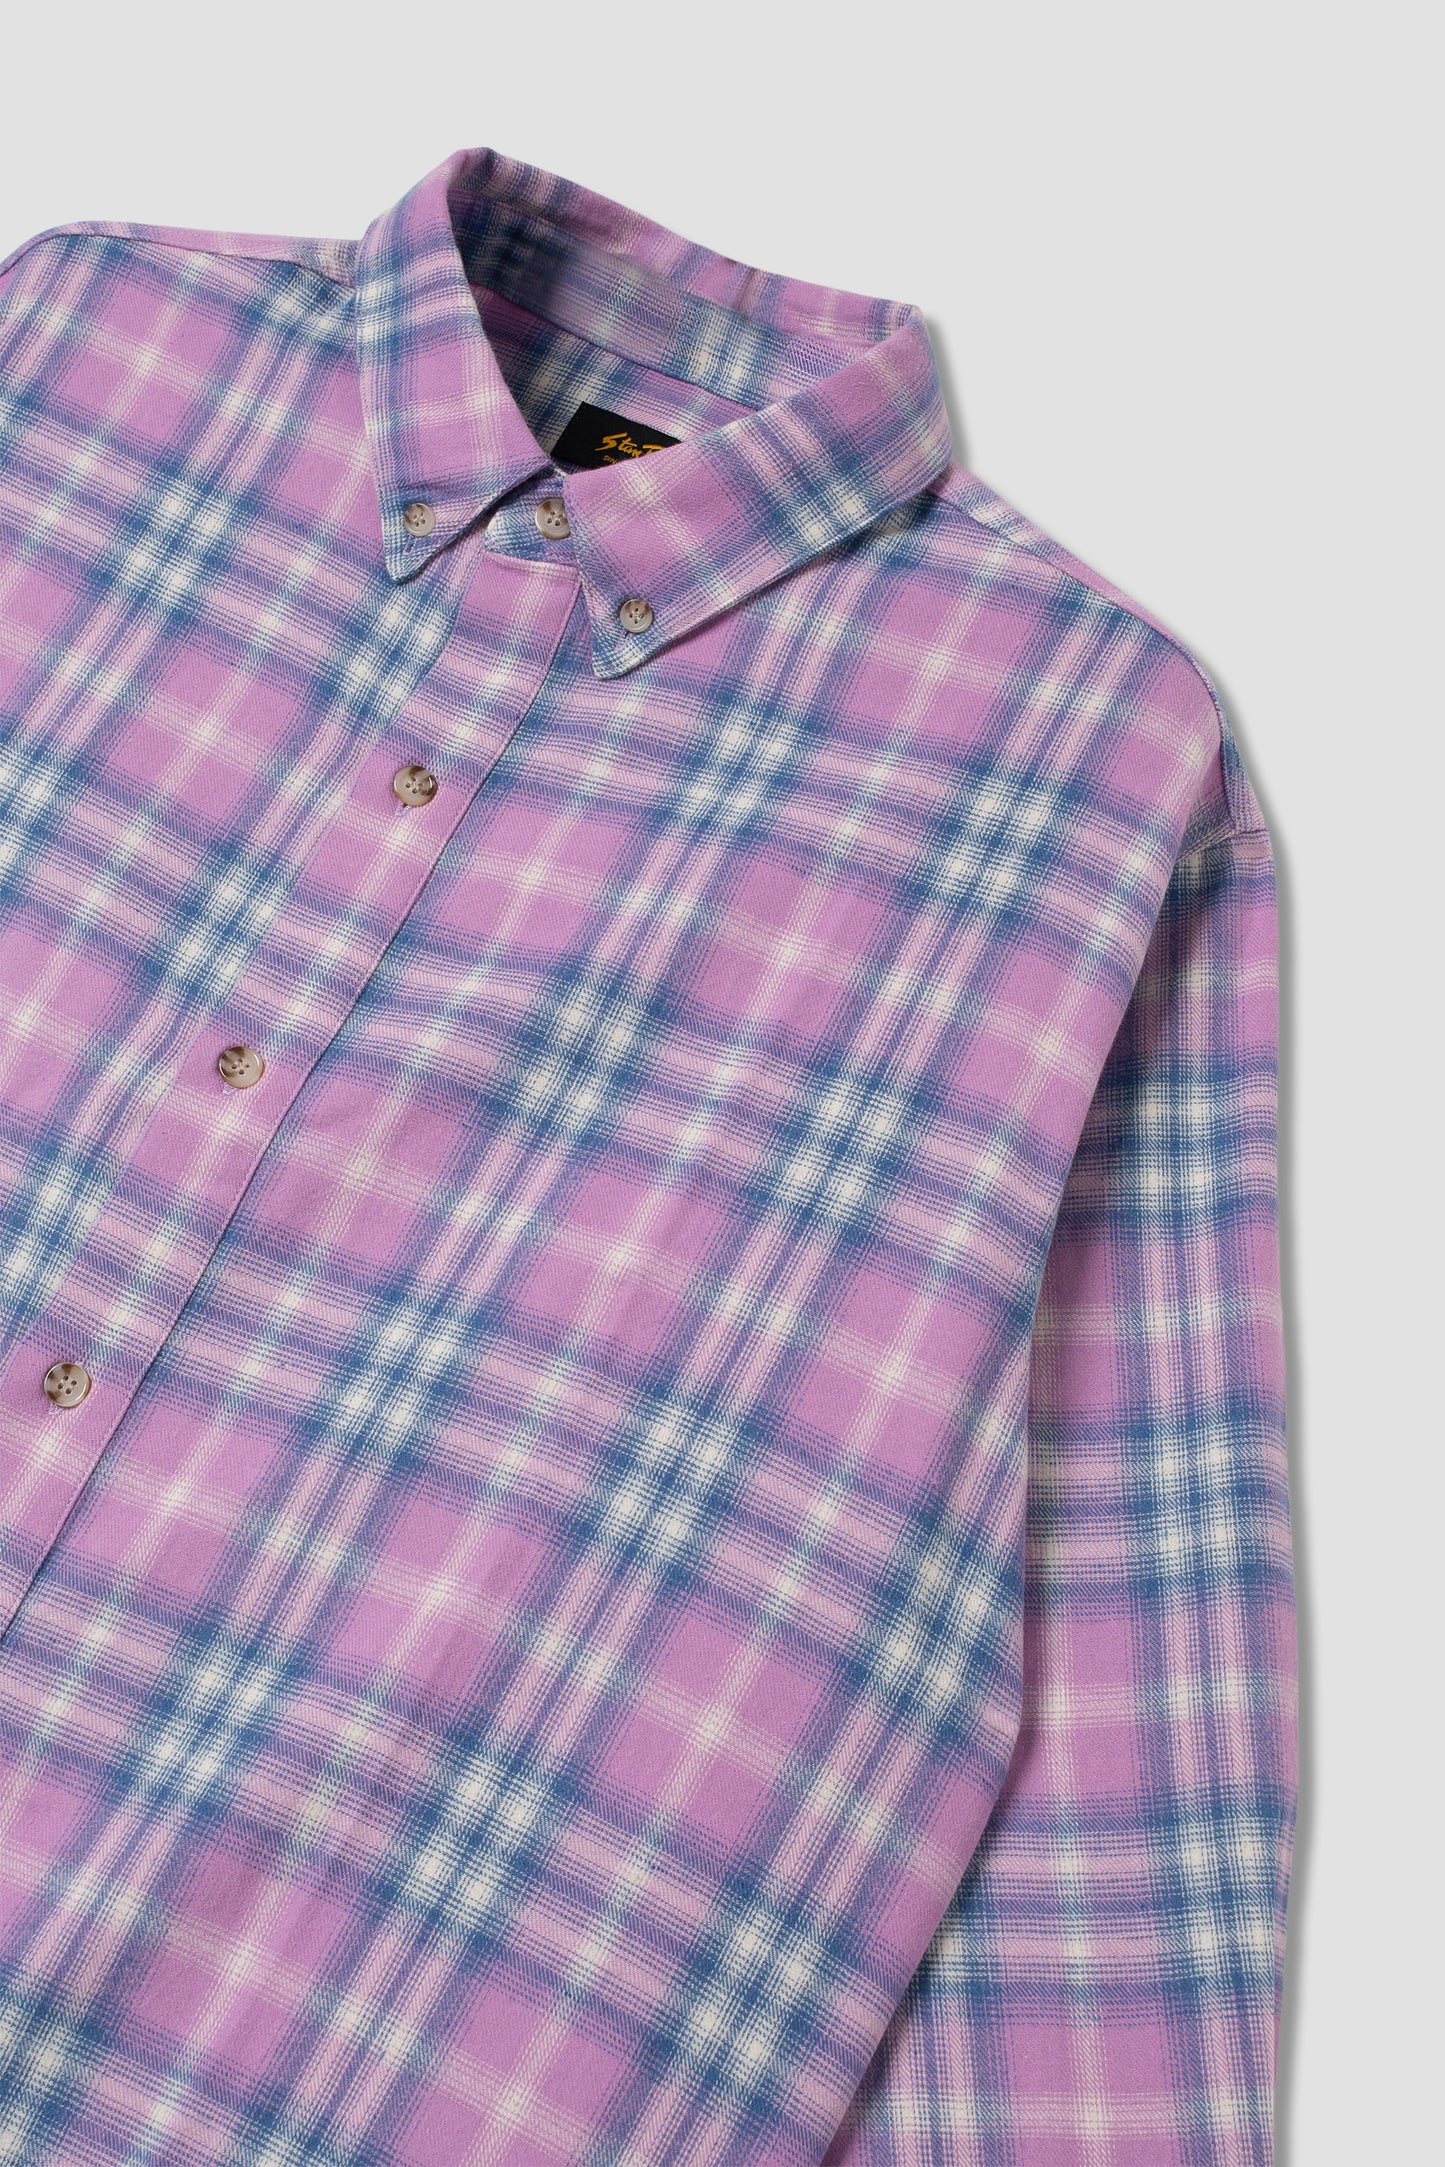 Flannel Shirt (Pink) Plaid